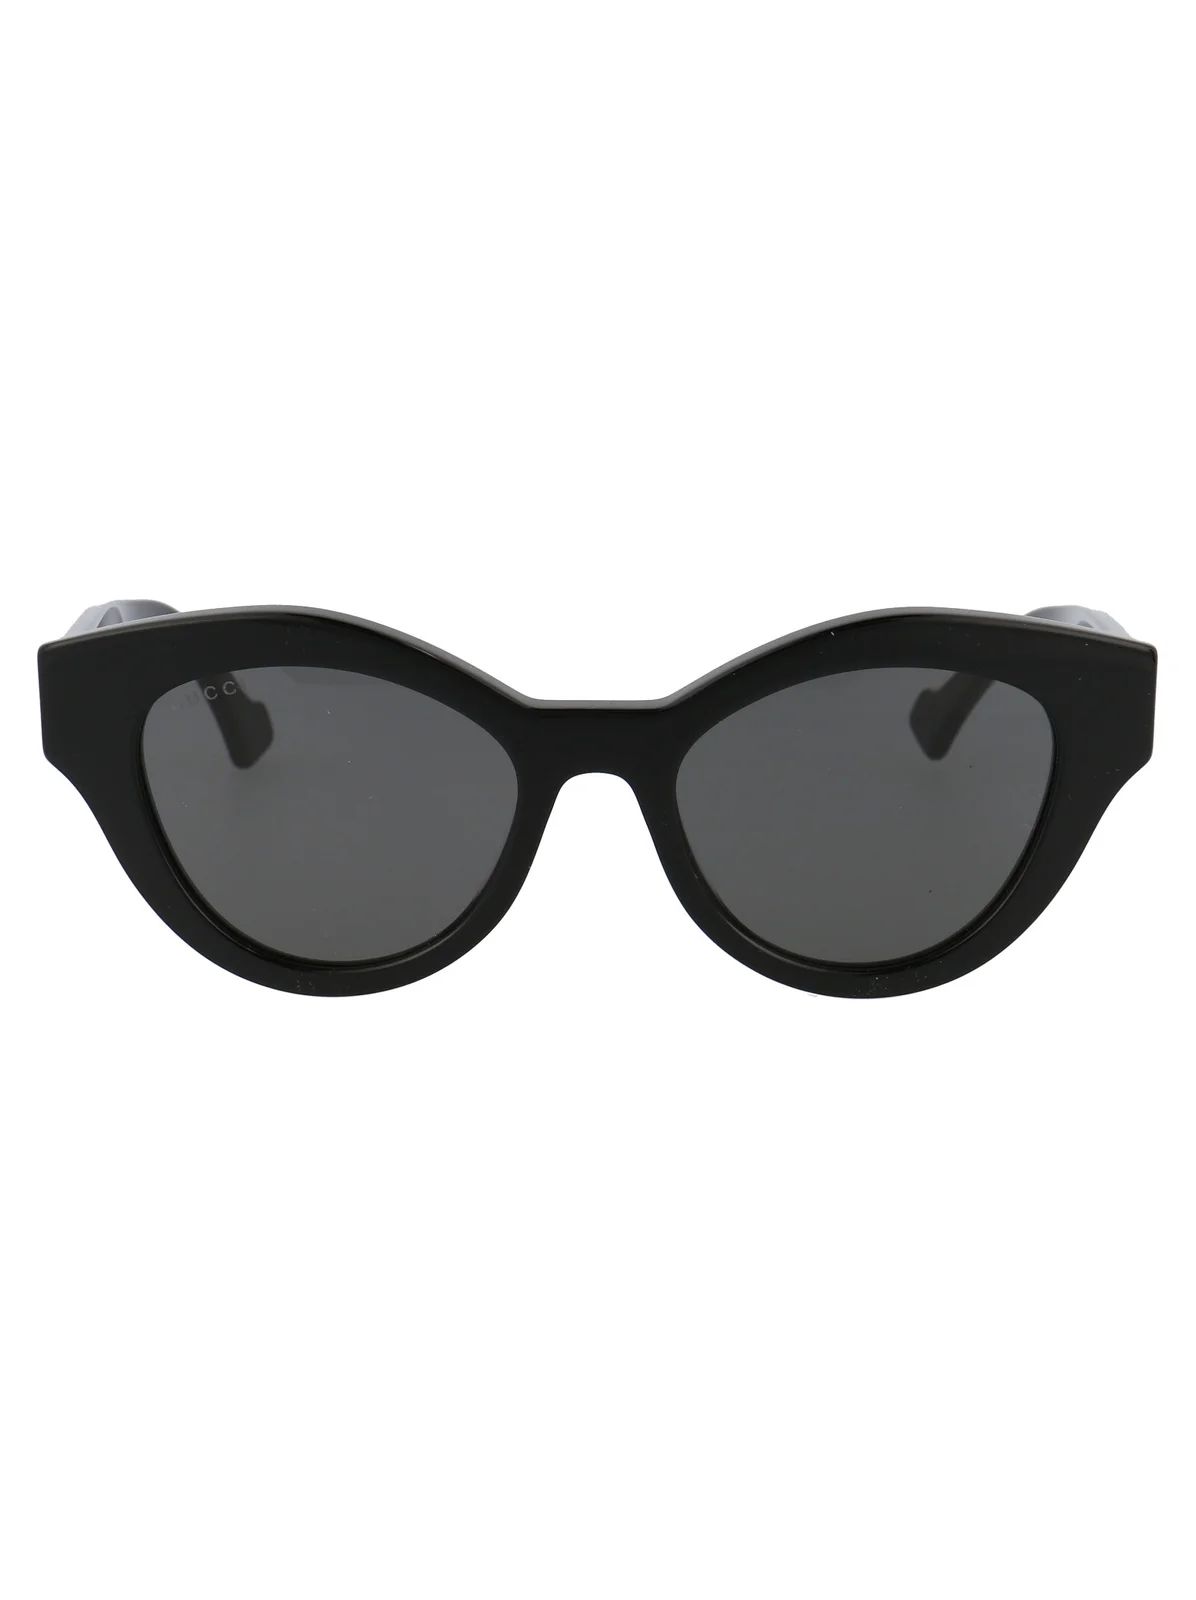 Gucci Eyewear Cat Eye Sunglasses | Cettire Global